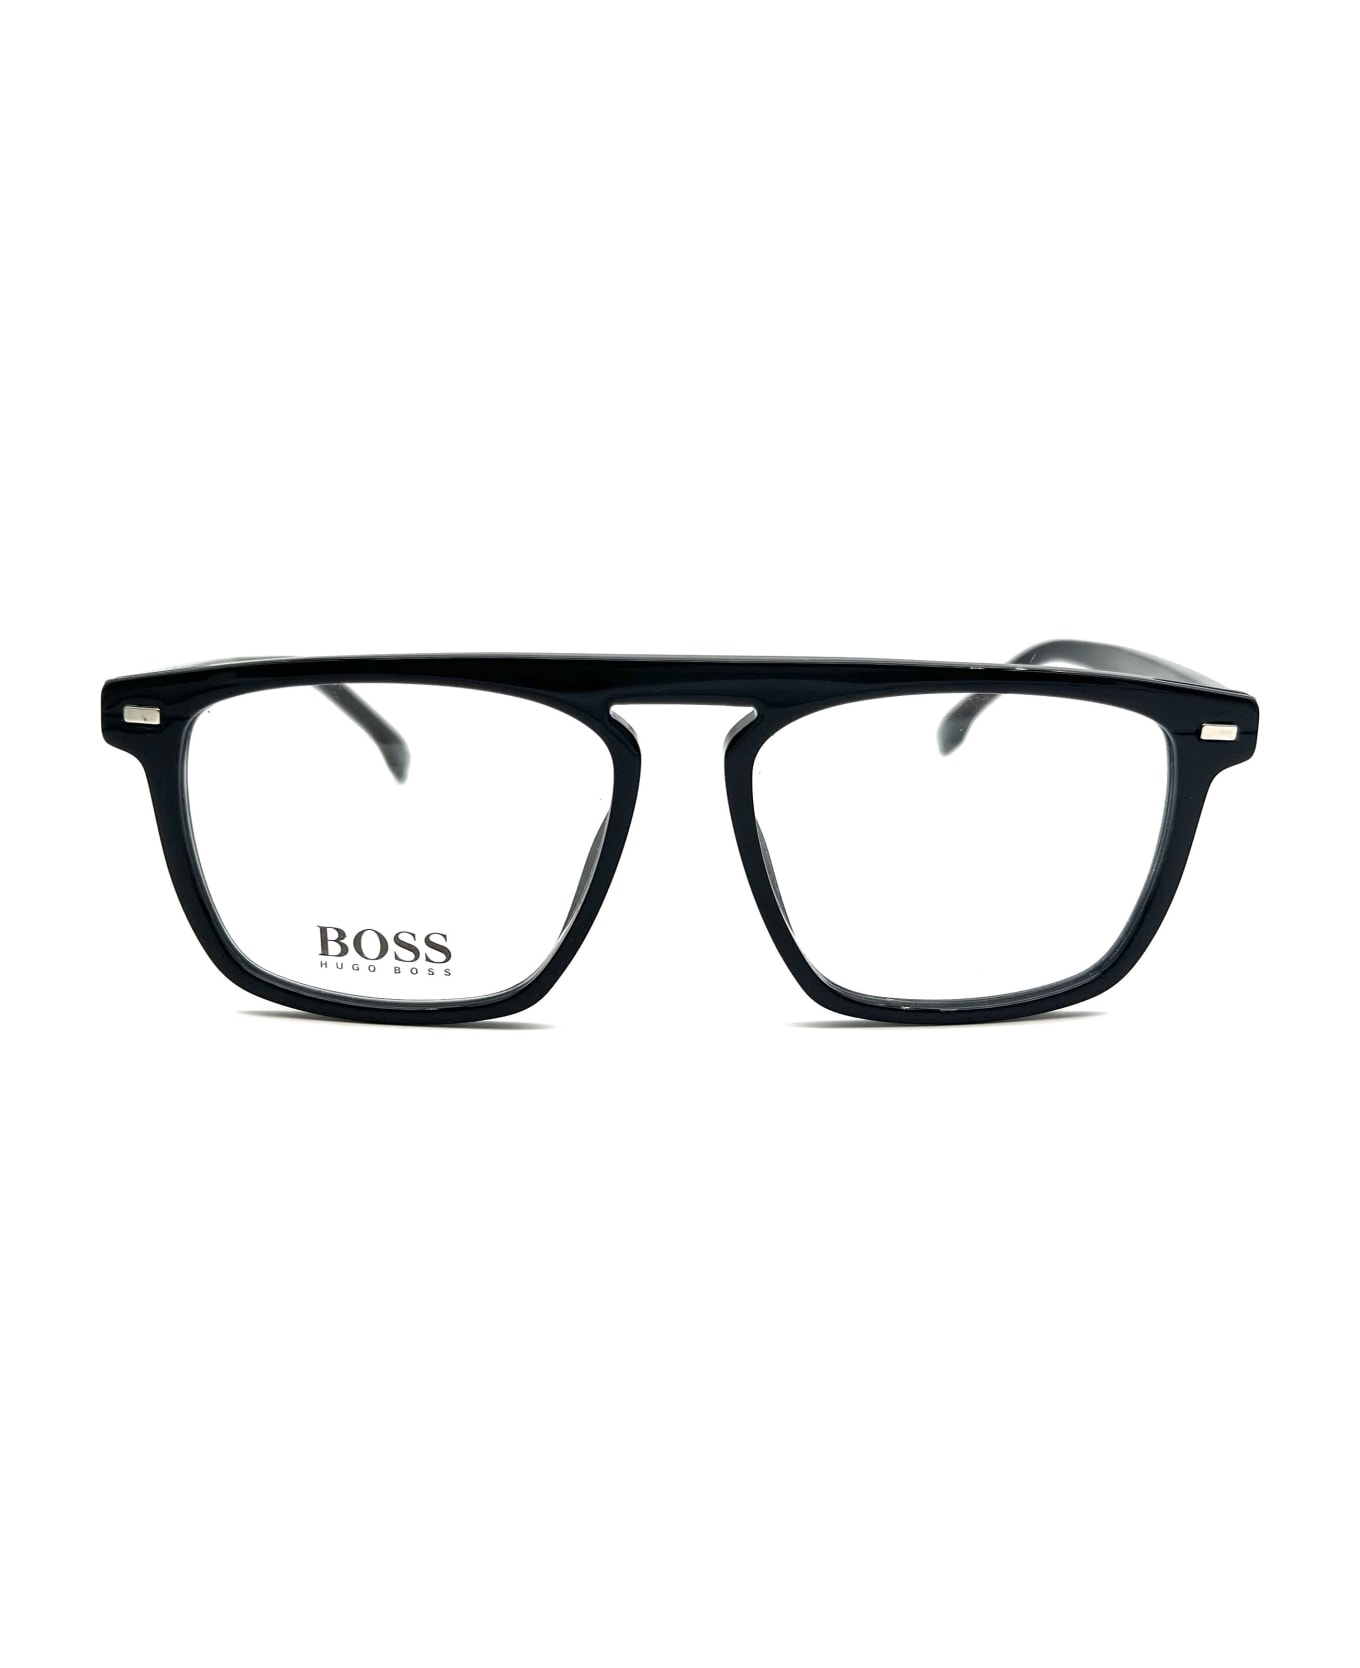 Hugo Boss BOSS 1128 Eyewear - Black